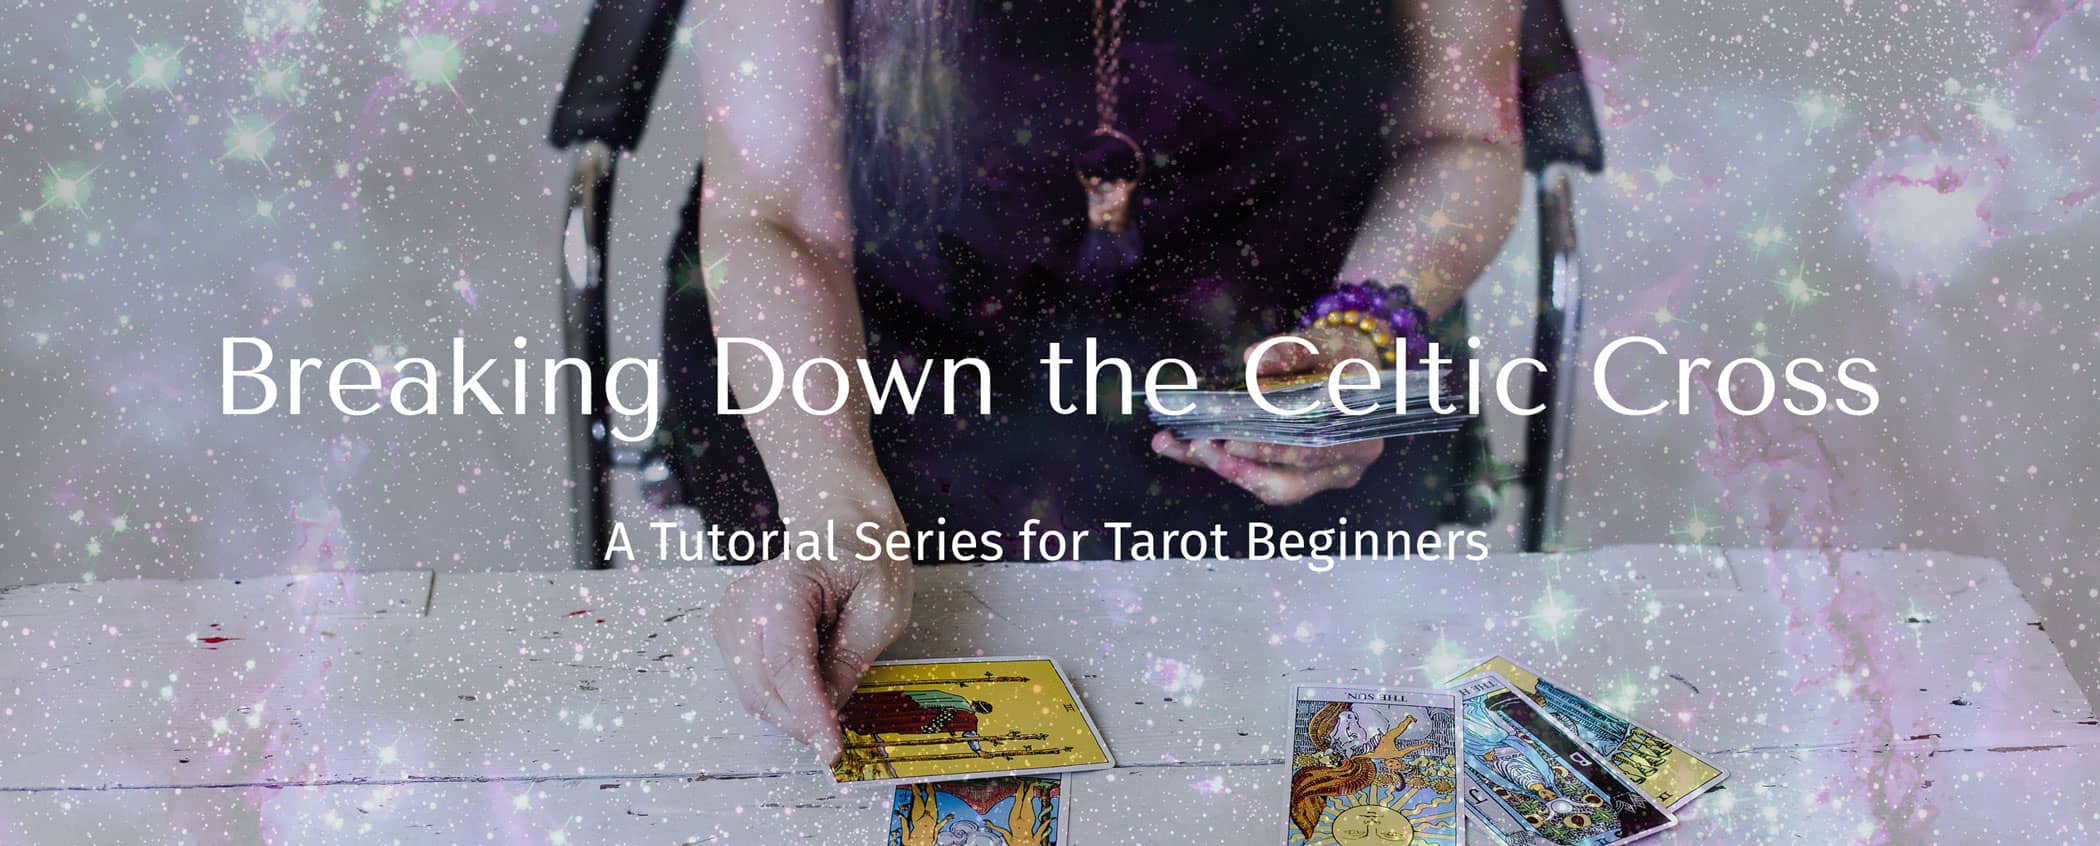 Breaking Down the Celtic Cross - A Tarot Tutorial